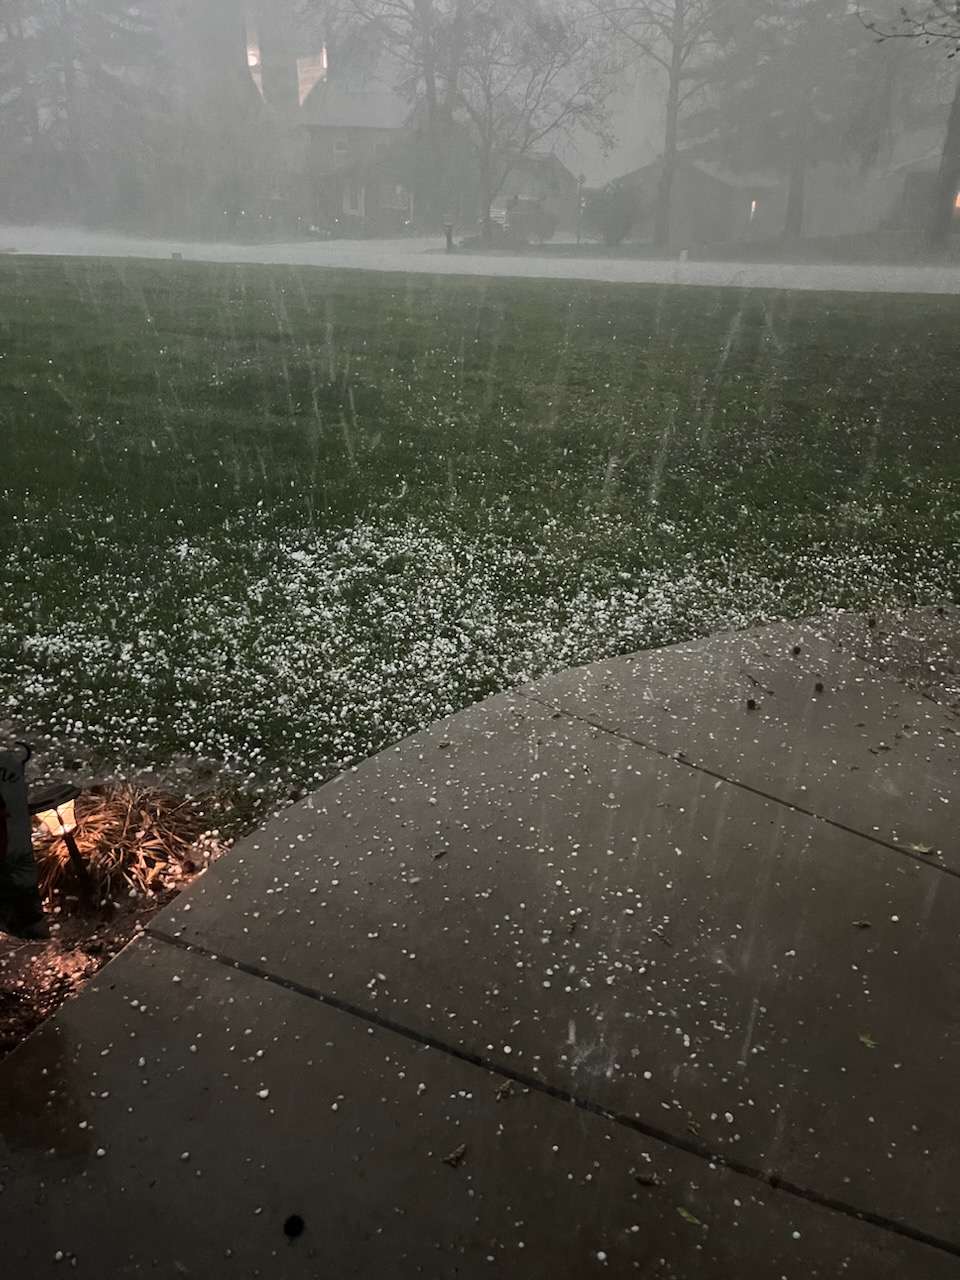 Quarter sized hail in St. Charles Missouri